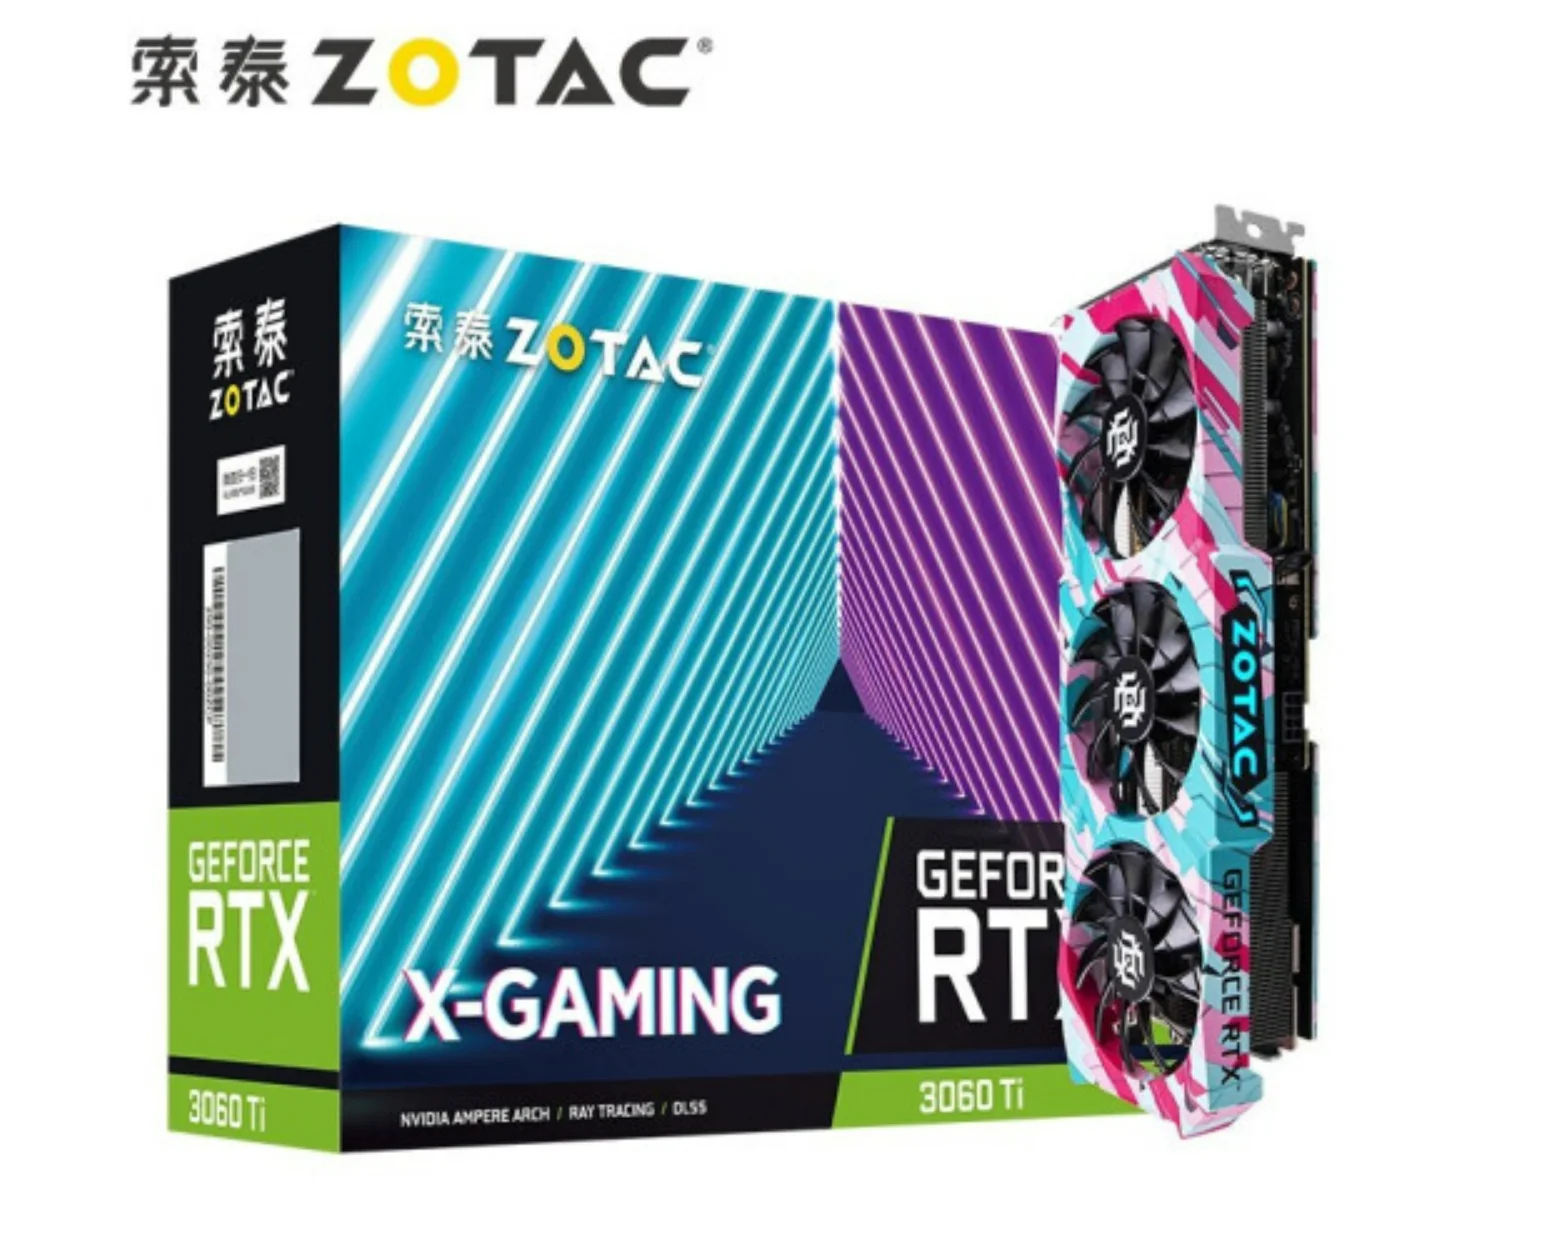 Geforce 3060 ti отзывы. Зотак 3080 видеокарта. Zotac 3070. Zotac 3070 x-Gaming OC. Zotac RTX 3070 X-Gaming.